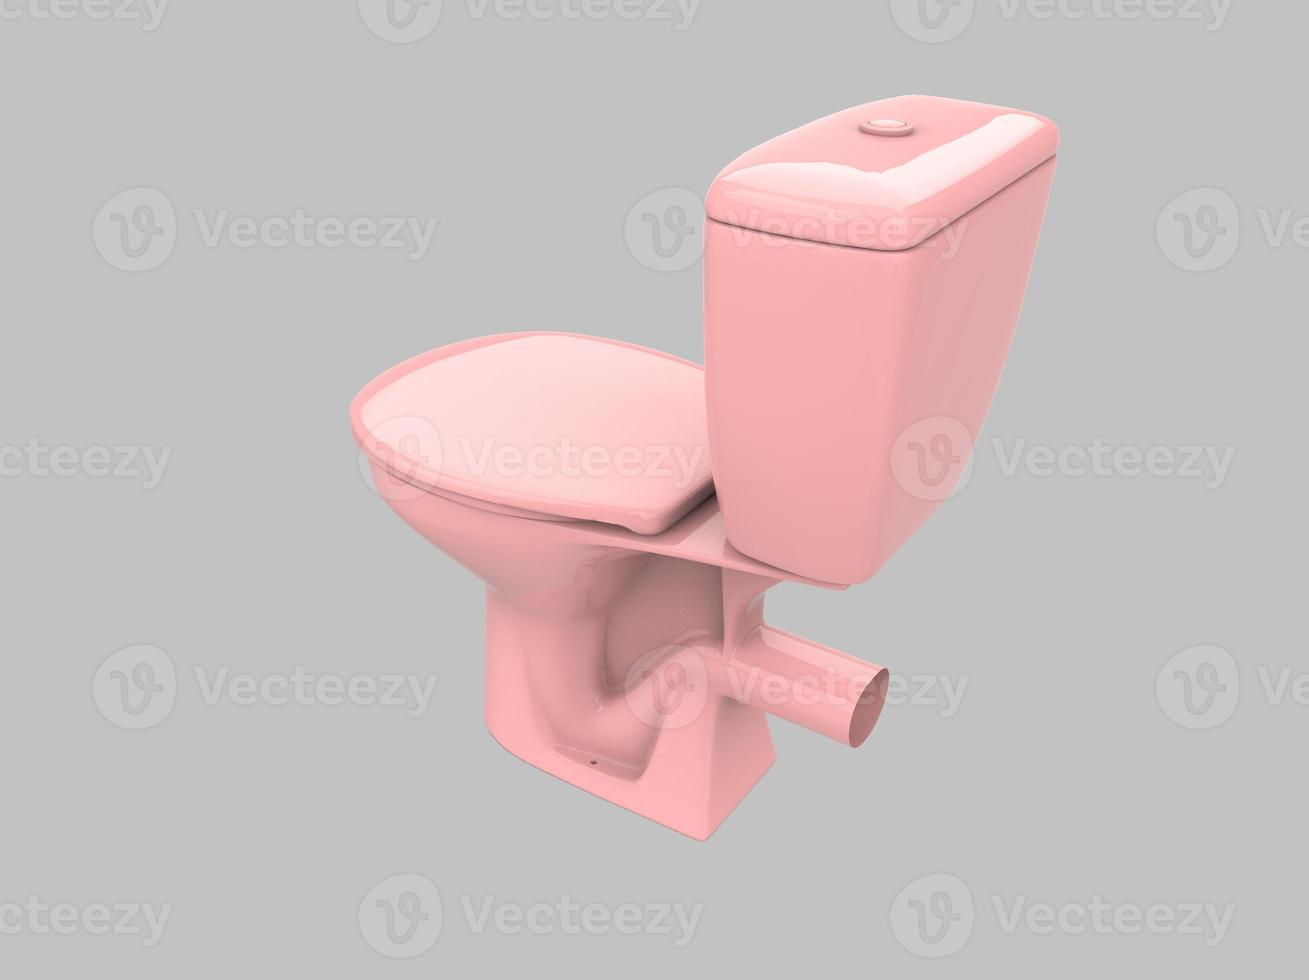 rosa schrank wc badezimmer wc porzellan 3d illustration foto